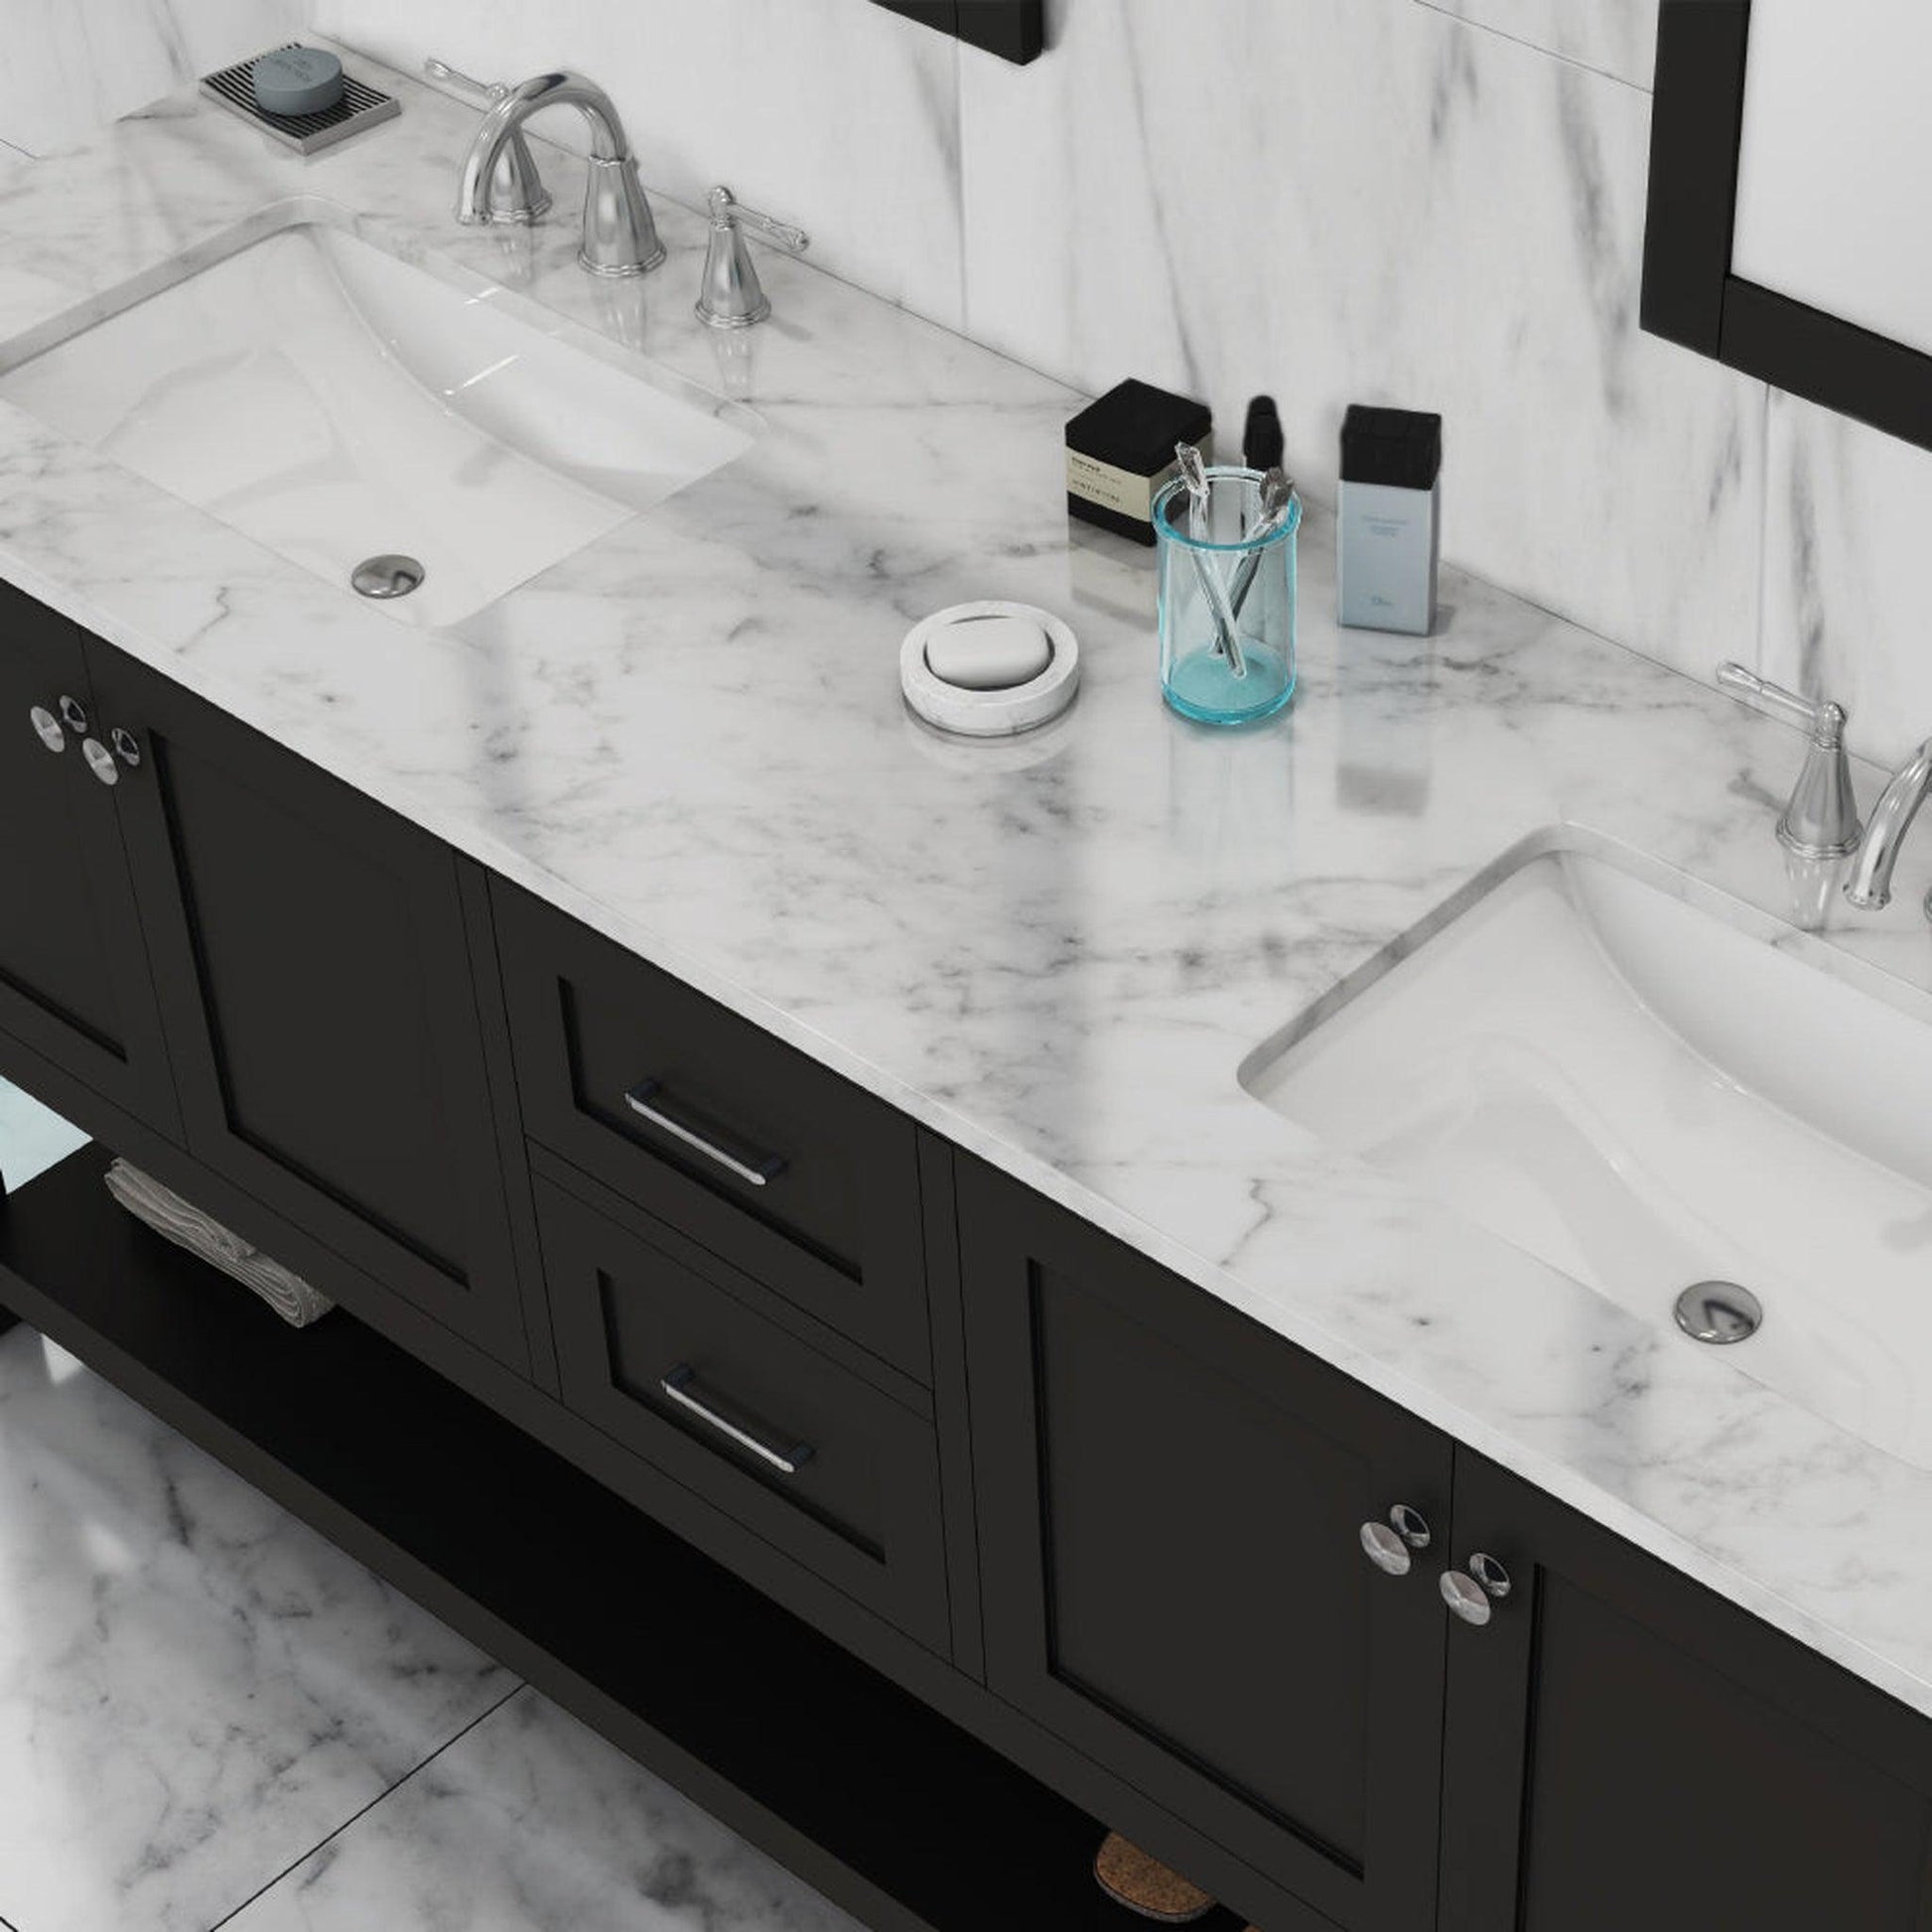 Alya Bath Wilmington 72" Double Espresso Freestanding Bathroom Vanity With Carrara Marble Top, Ceramic Sink and Wall Mounted Mirror